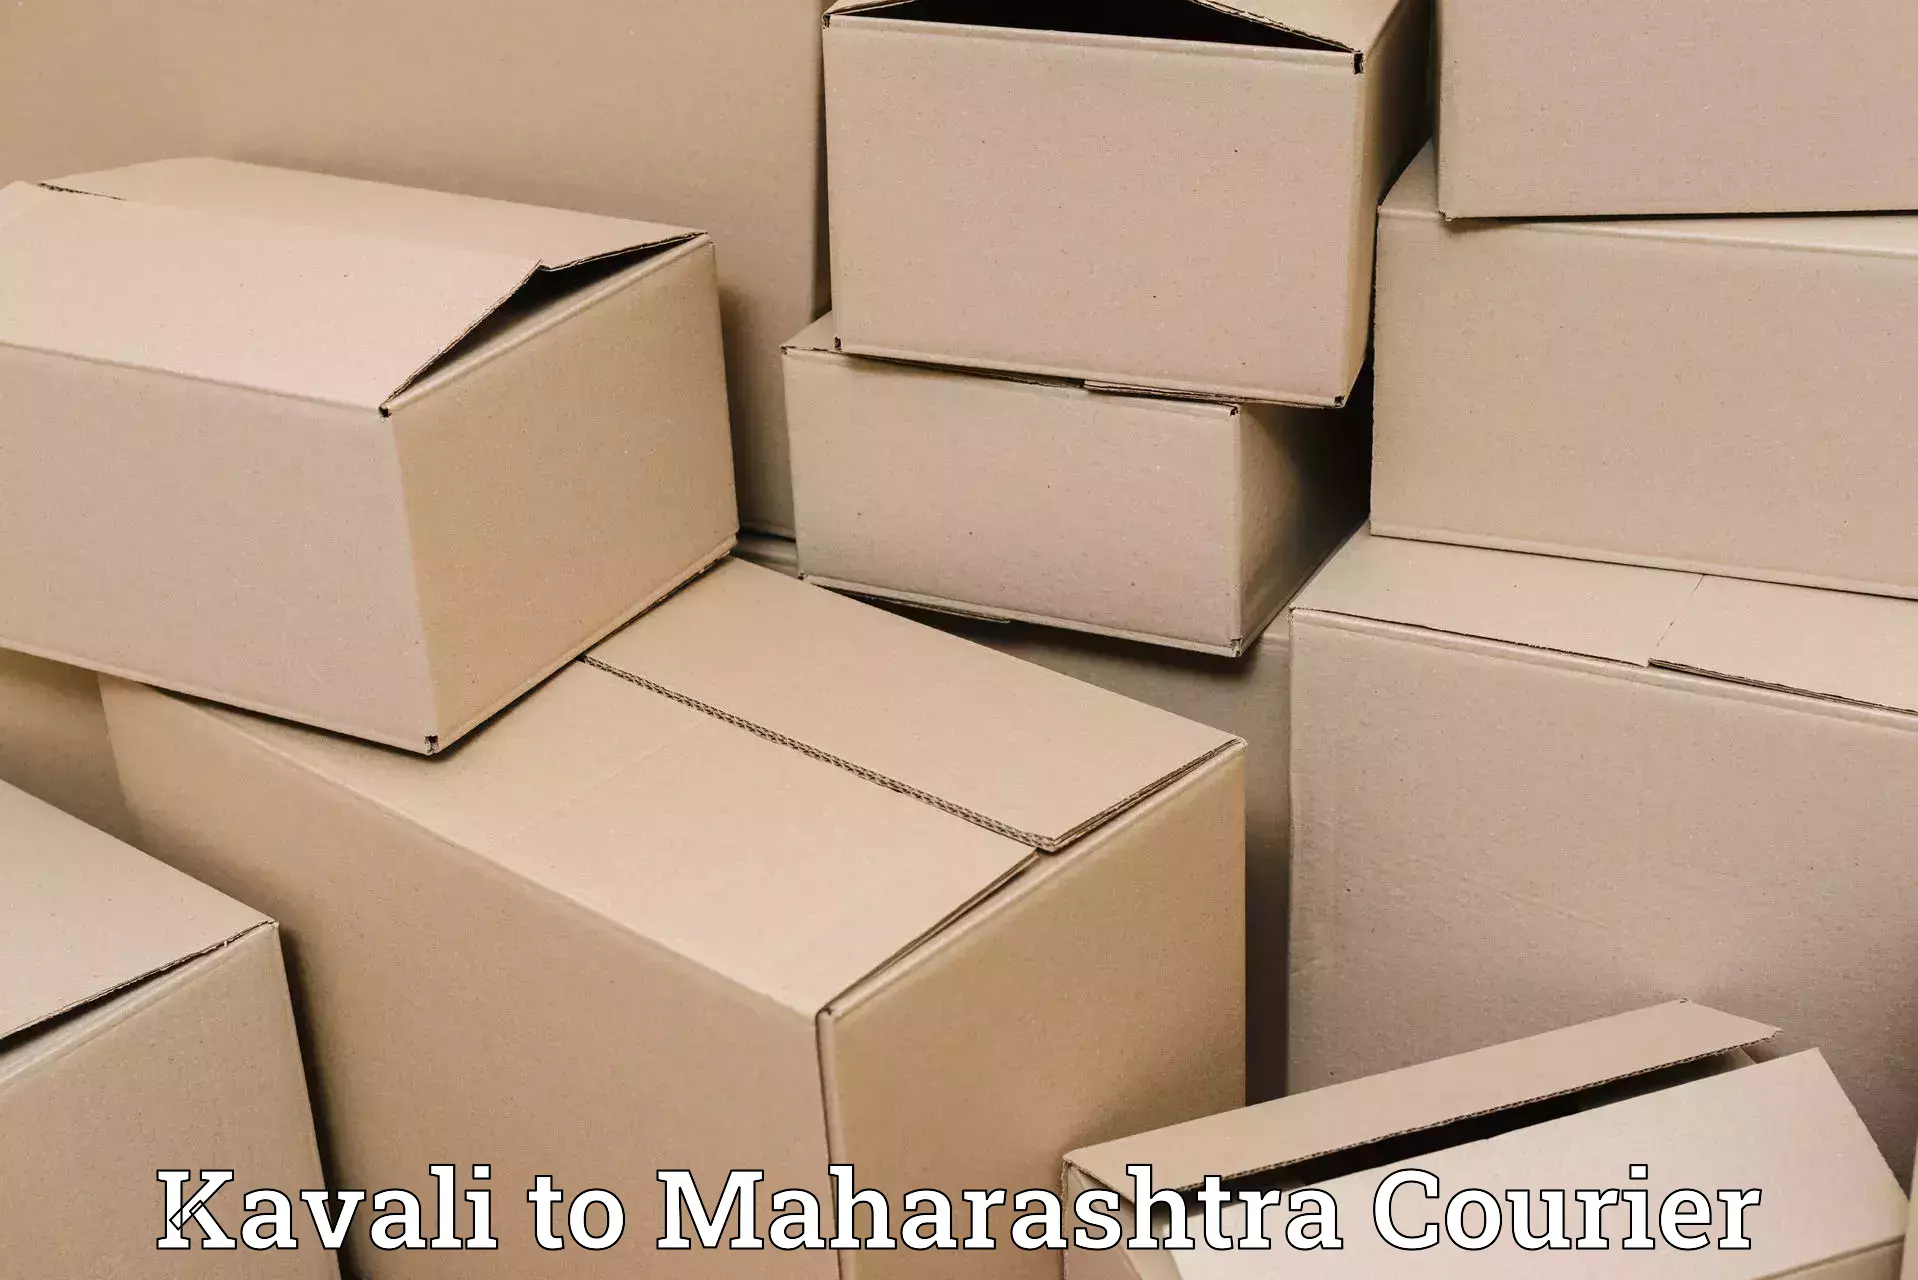 Logistics service provider Kavali to Maharashtra